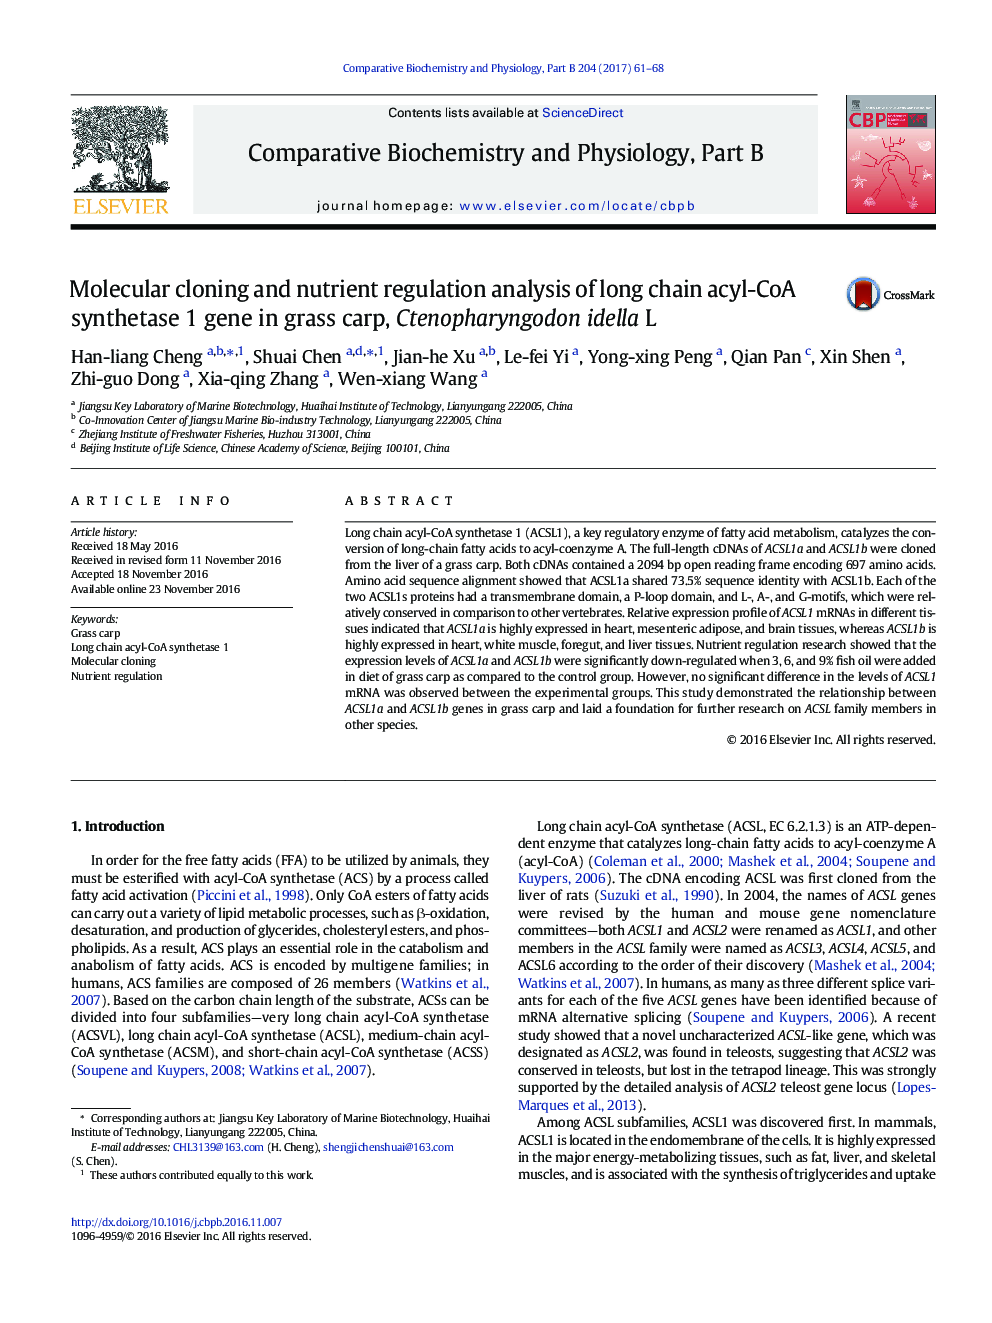 Molecular cloning and nutrient regulation analysis of long chain acyl-CoA synthetase 1 gene in grass carp, Ctenopharyngodon idella L